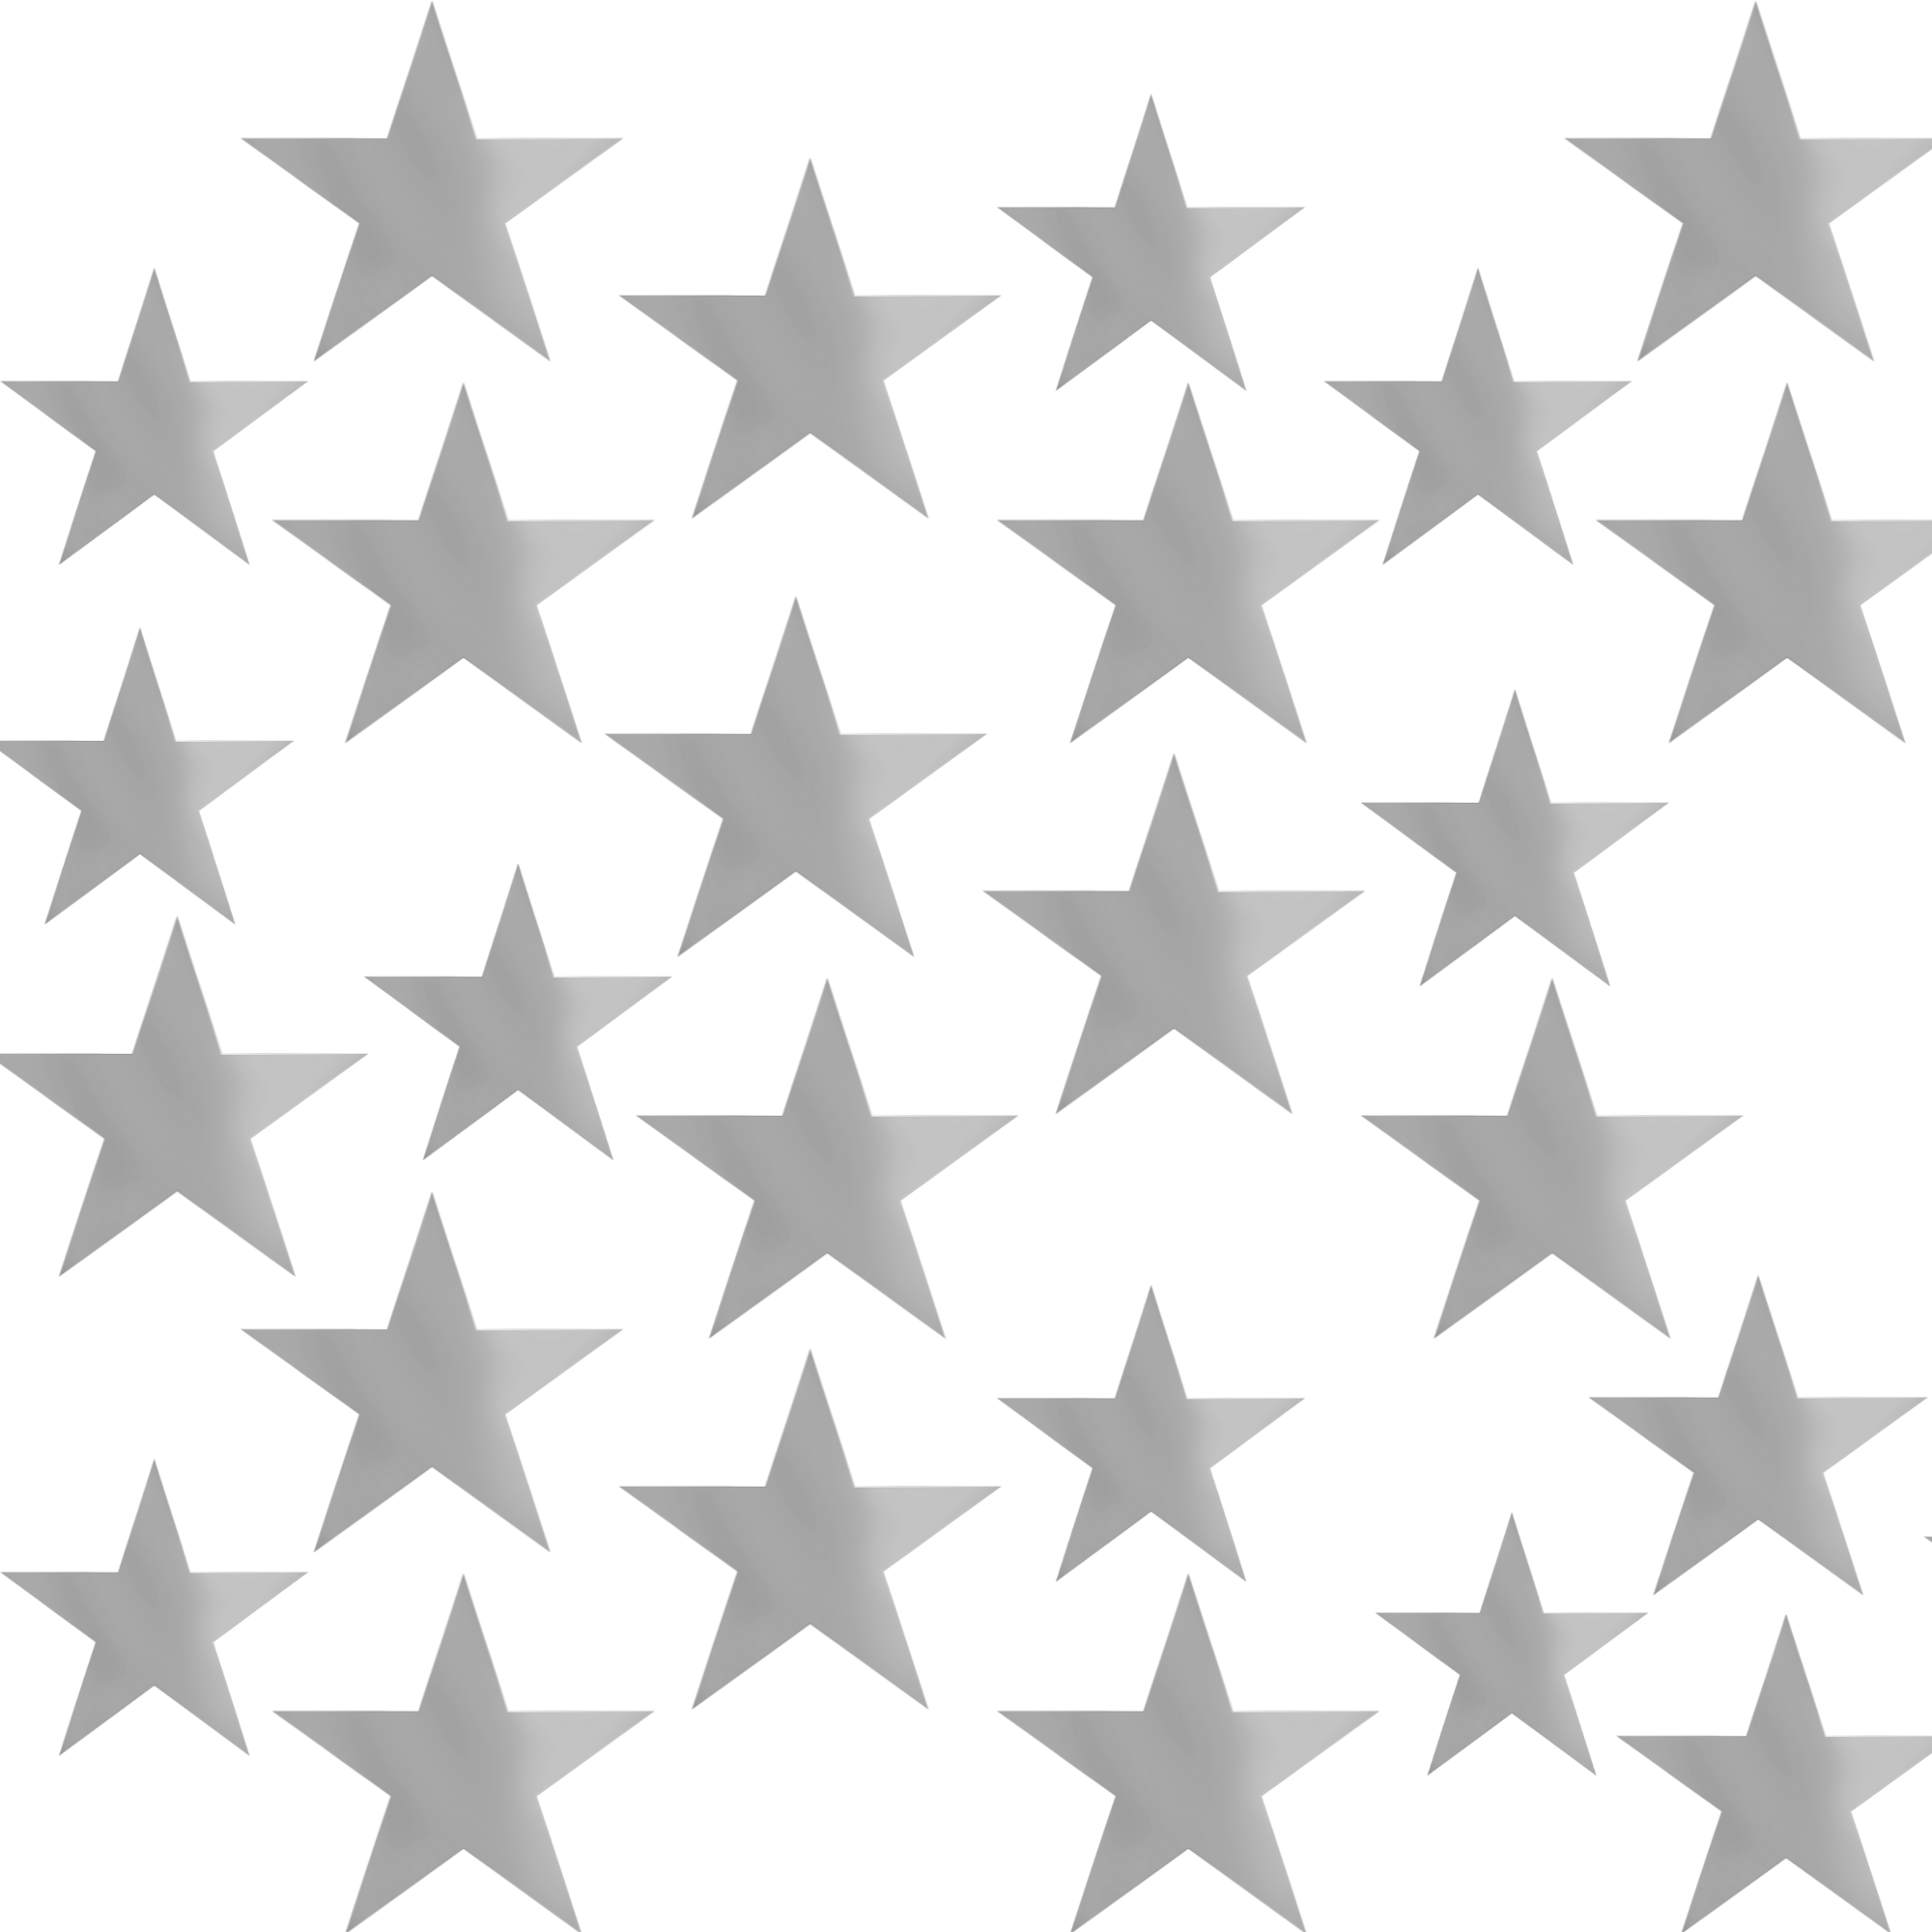 Silver Star Wall Decal, Star Wall Sticker